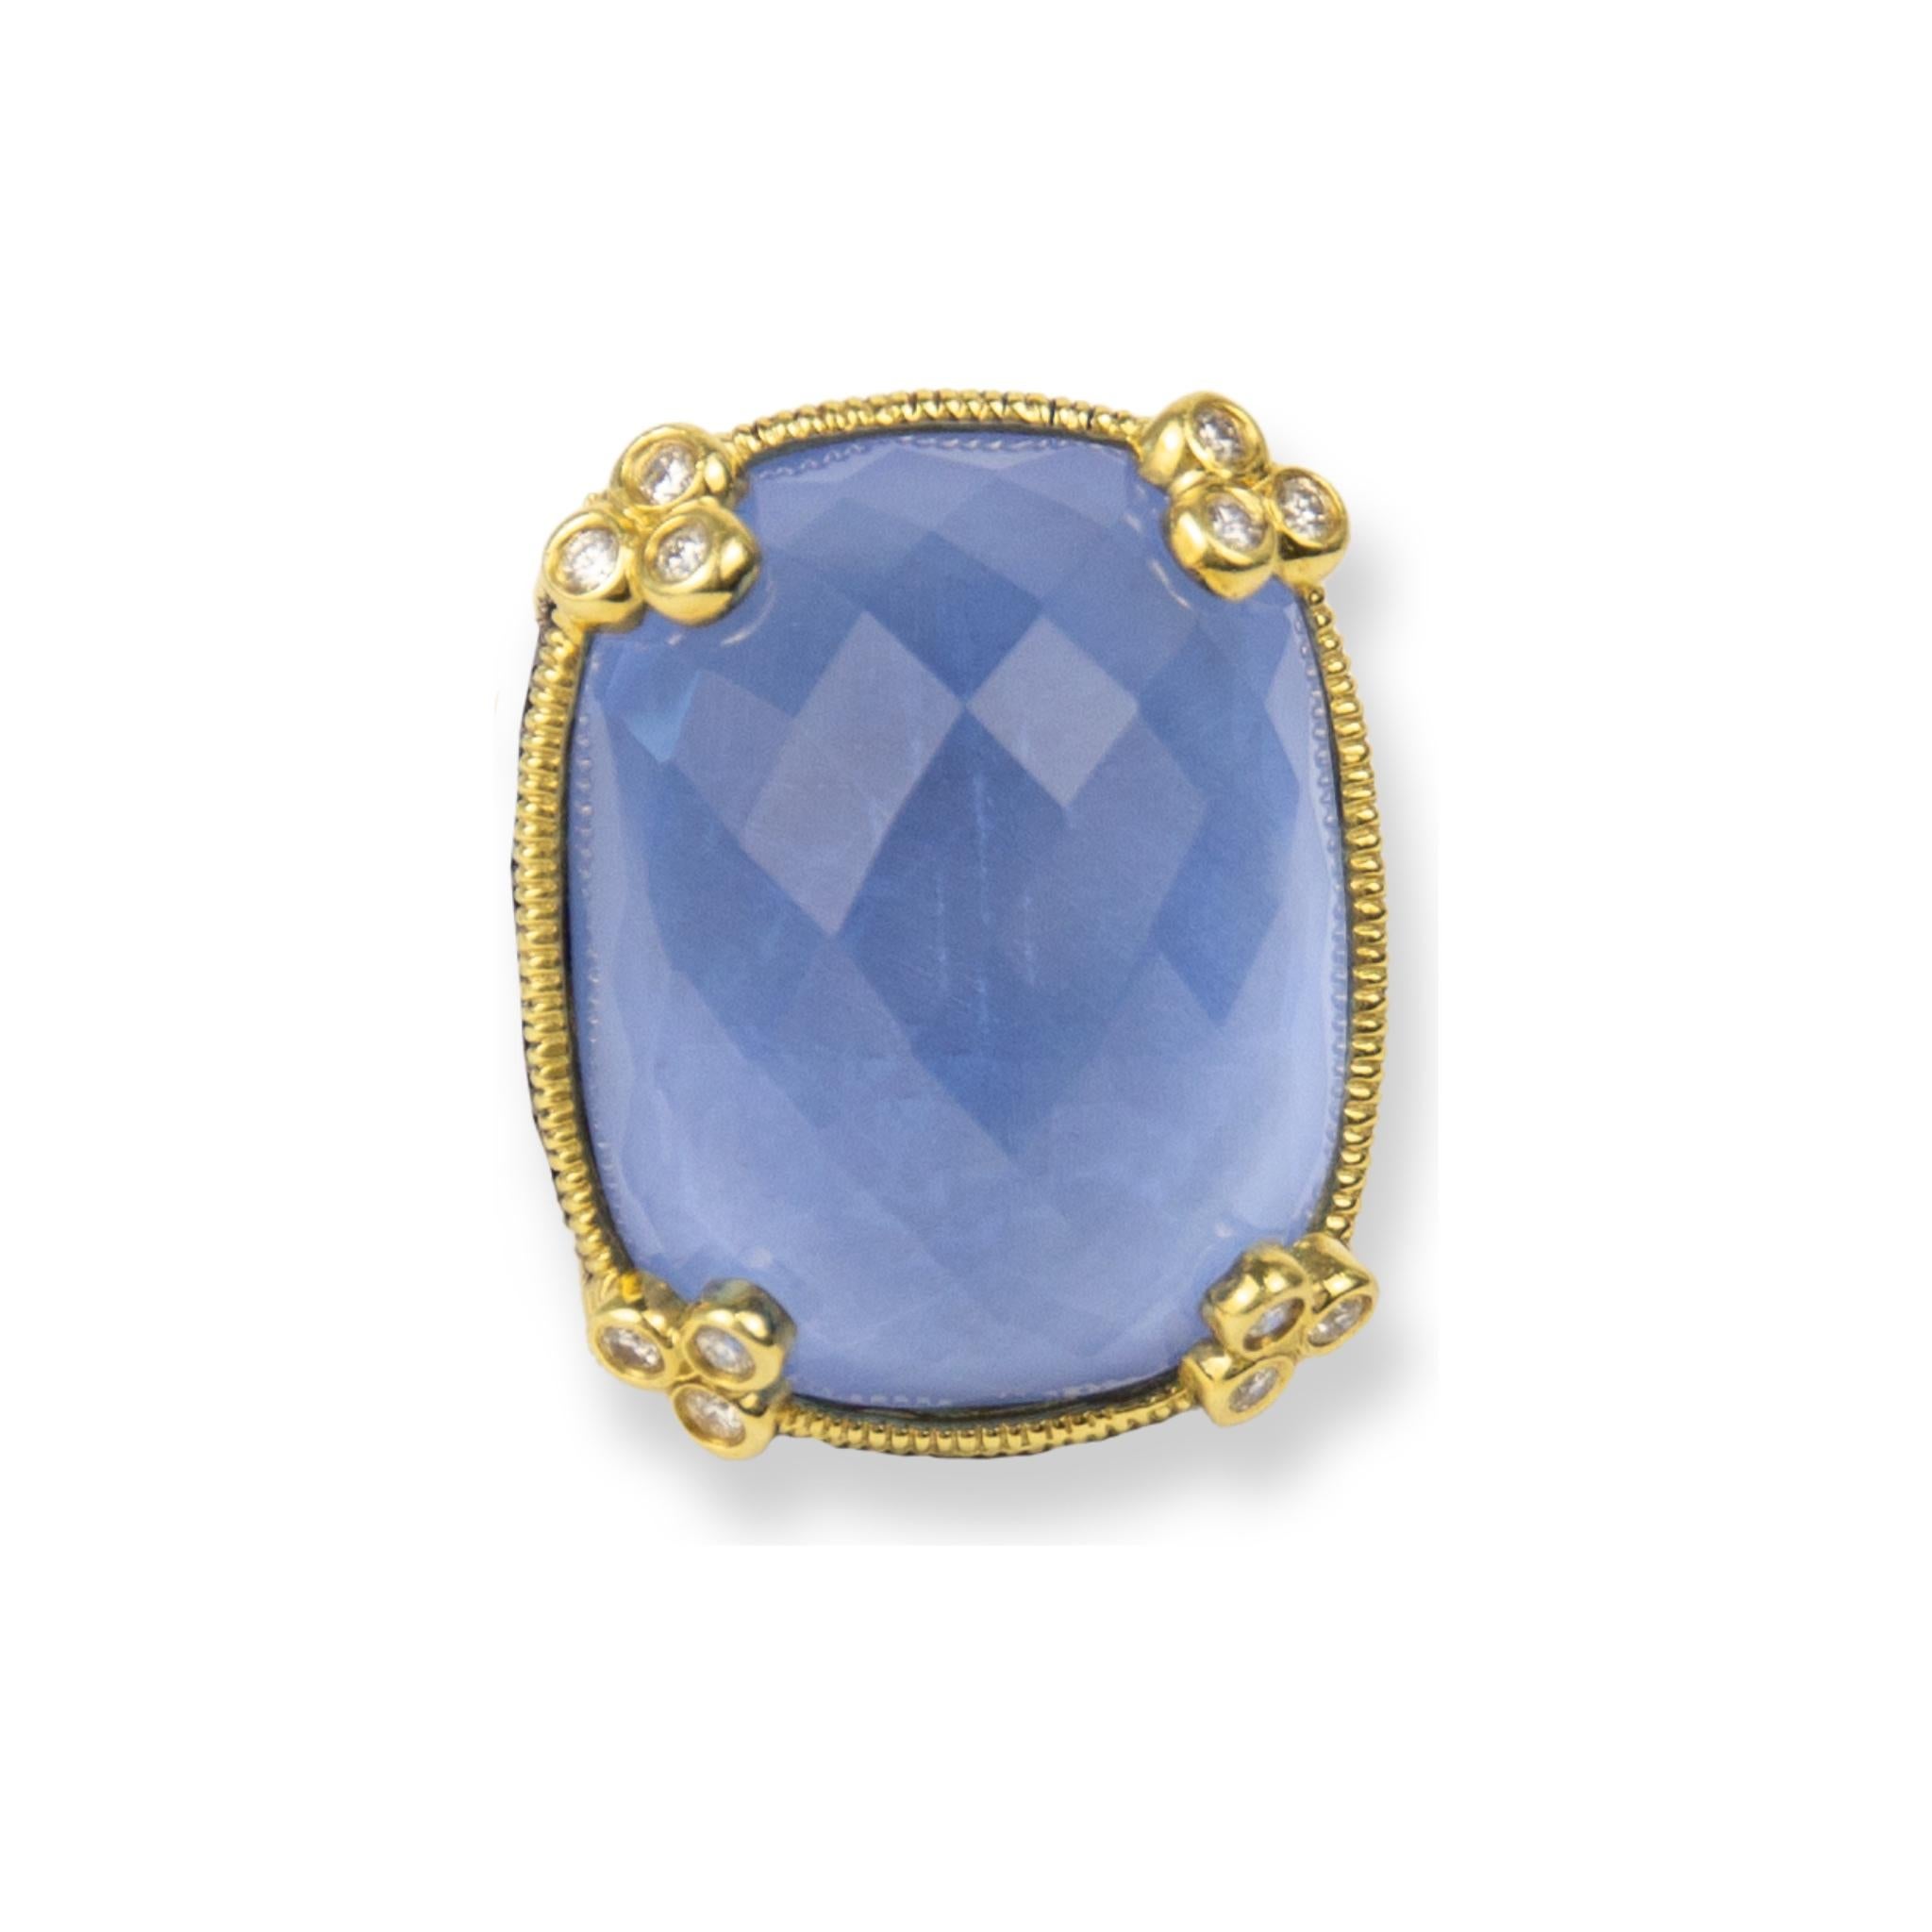 Judith Ripka 18K Yellow Gold Ring
Blue Quartz & Sapphires & Diamonds
Size: 6.75
SKU: JR01063
Retail price: $14,160.00